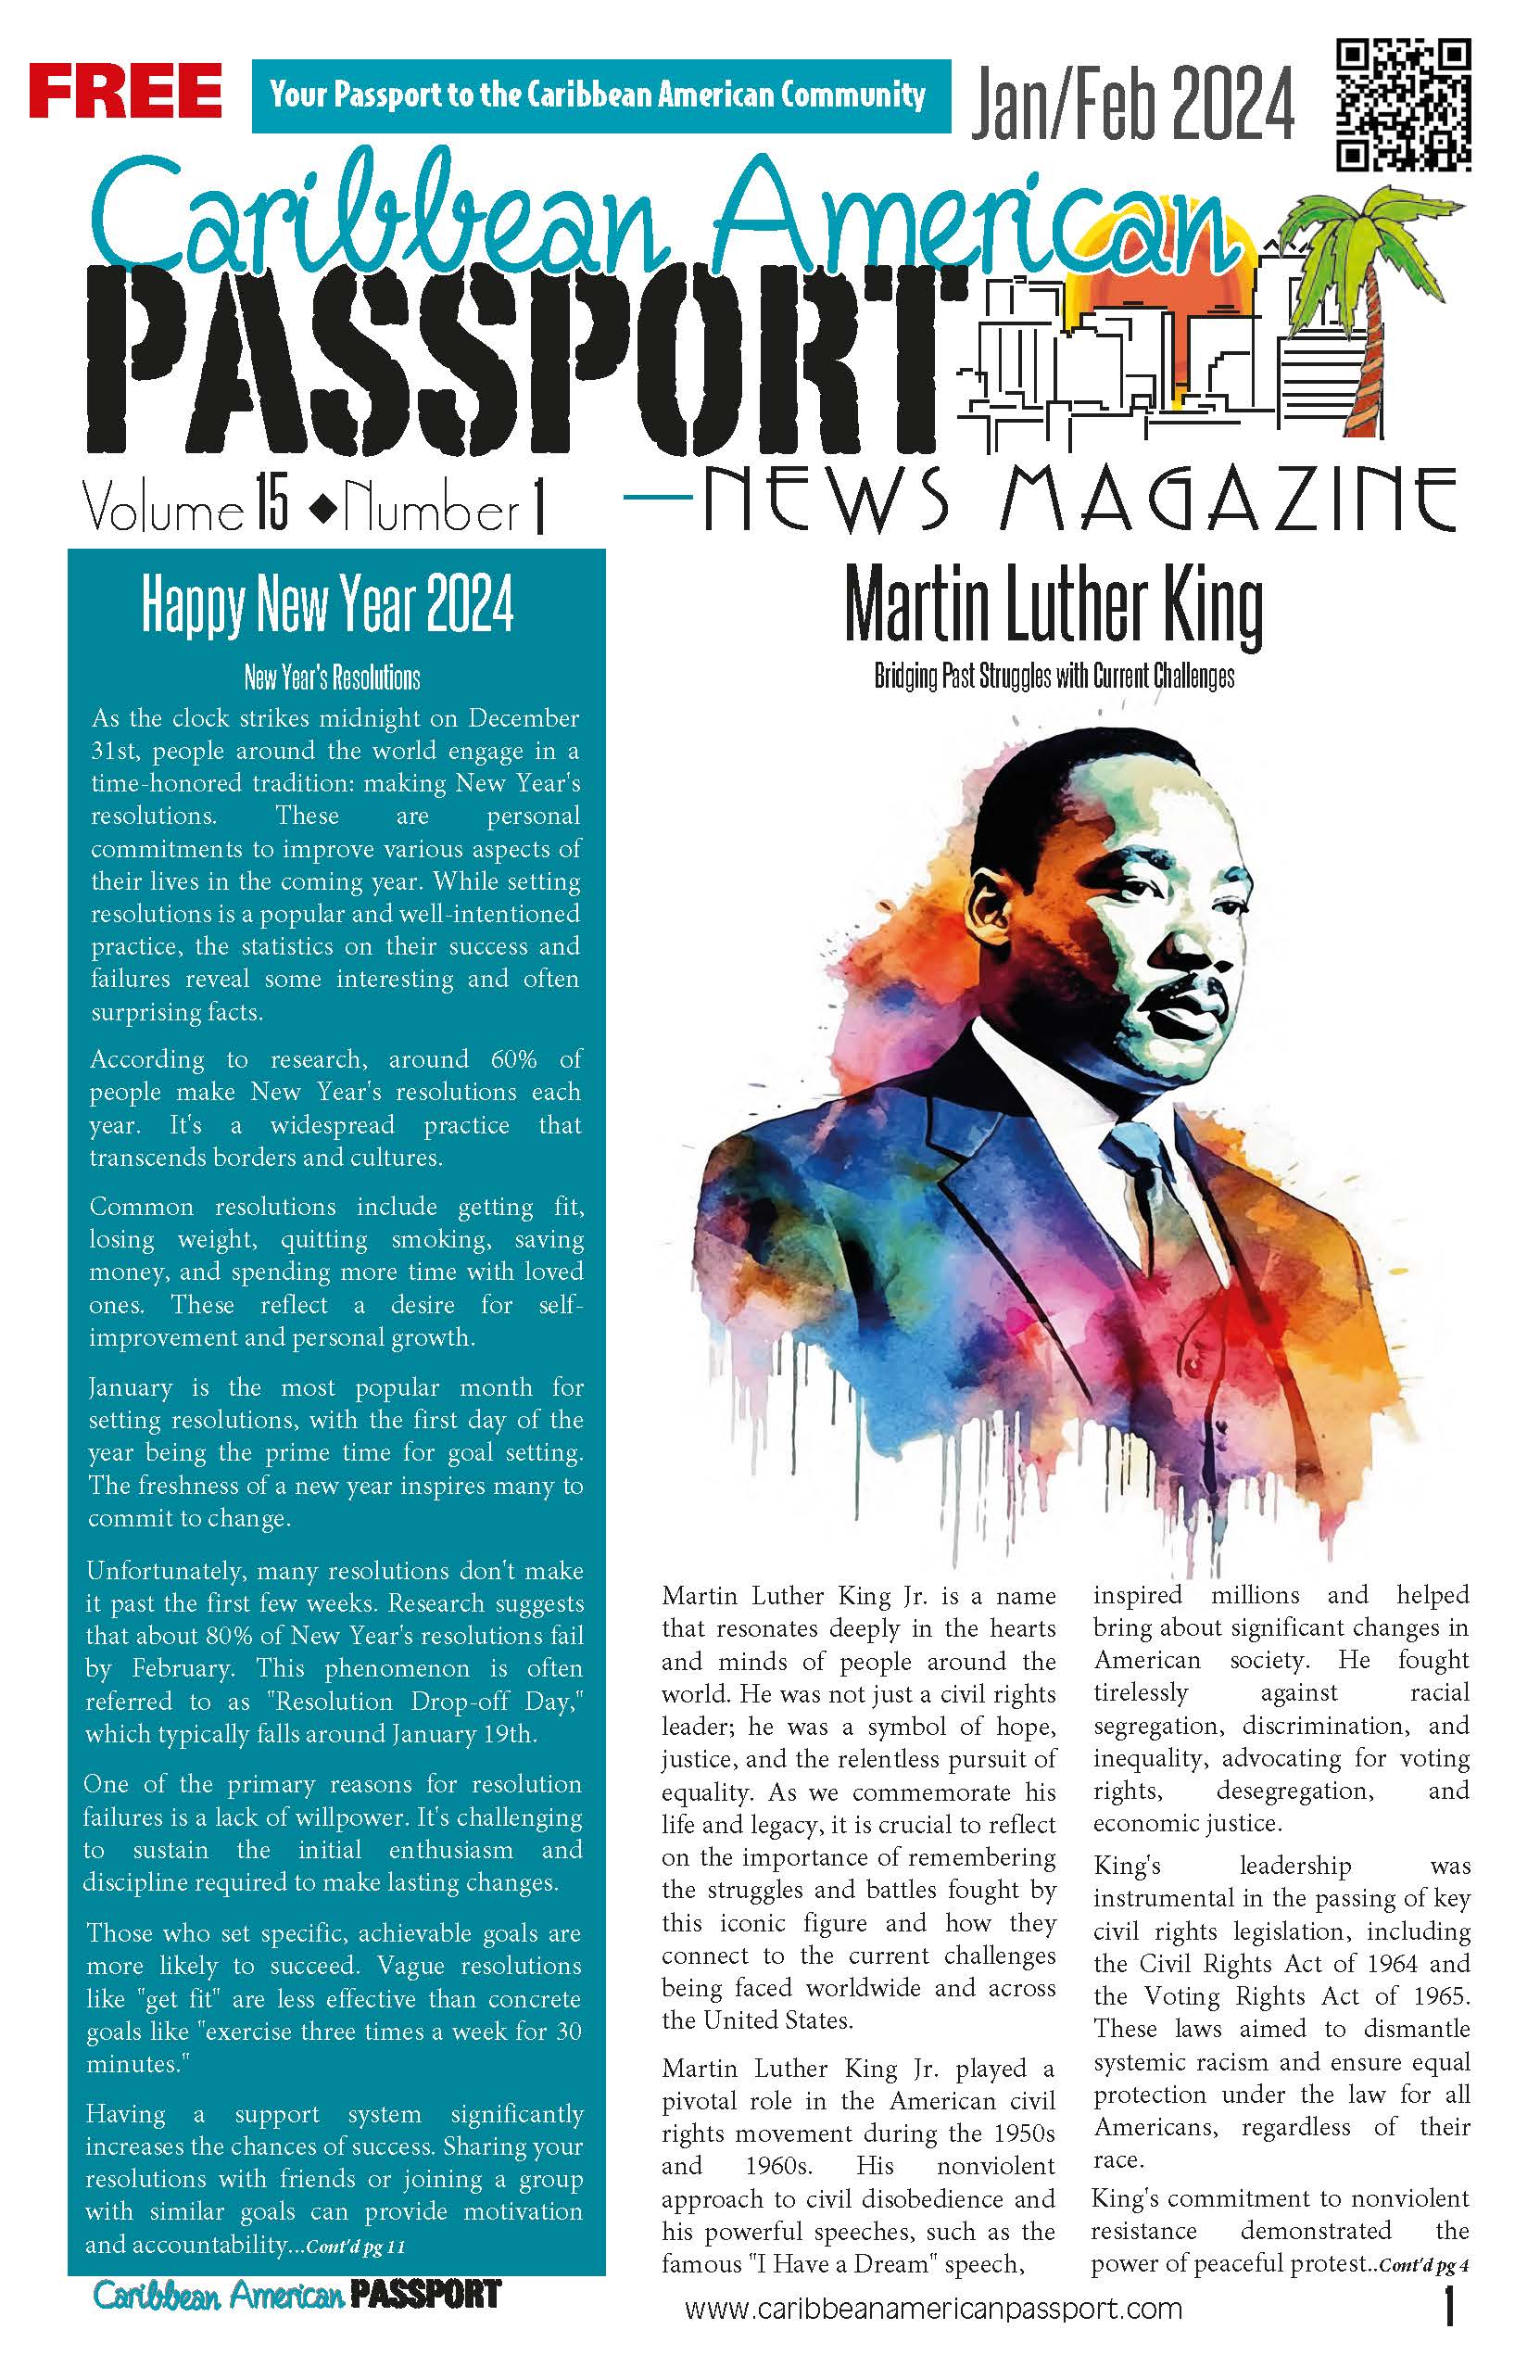 Caribbean American Passport News Magazine - Jan 2024